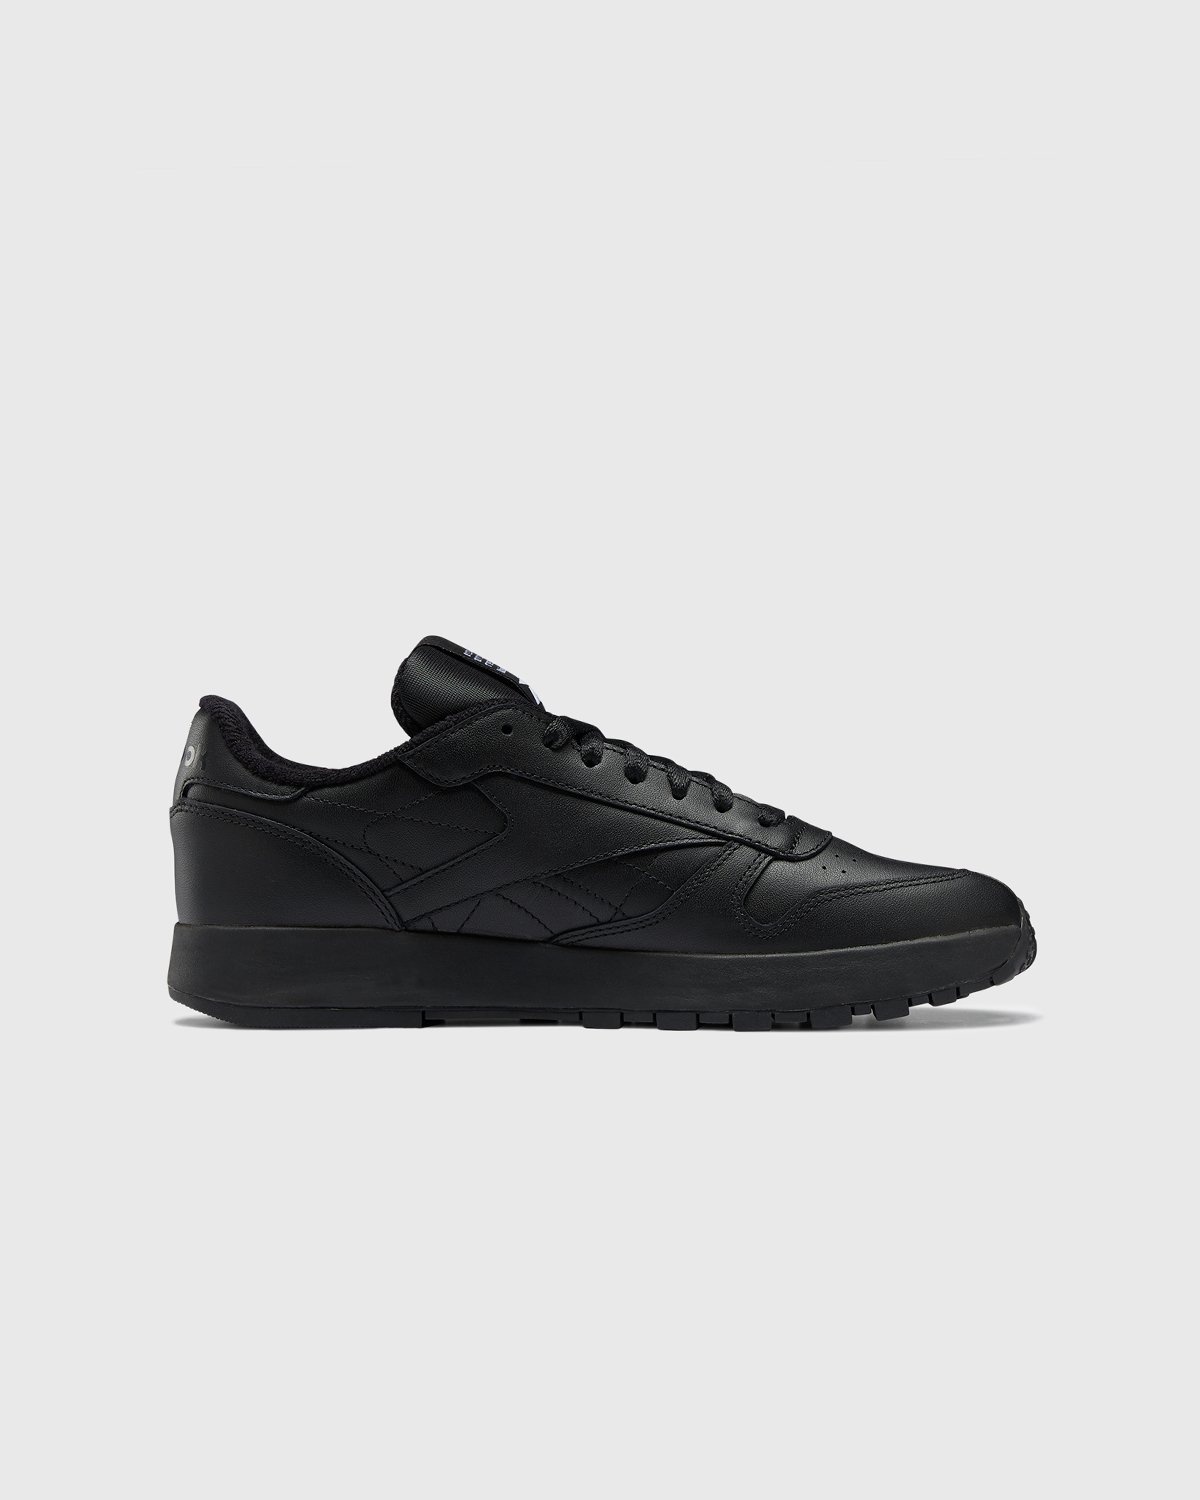 Maison Margiela x Reebok – Classic Leather Tabi Black - Low Top Sneakers - Black - Image 6